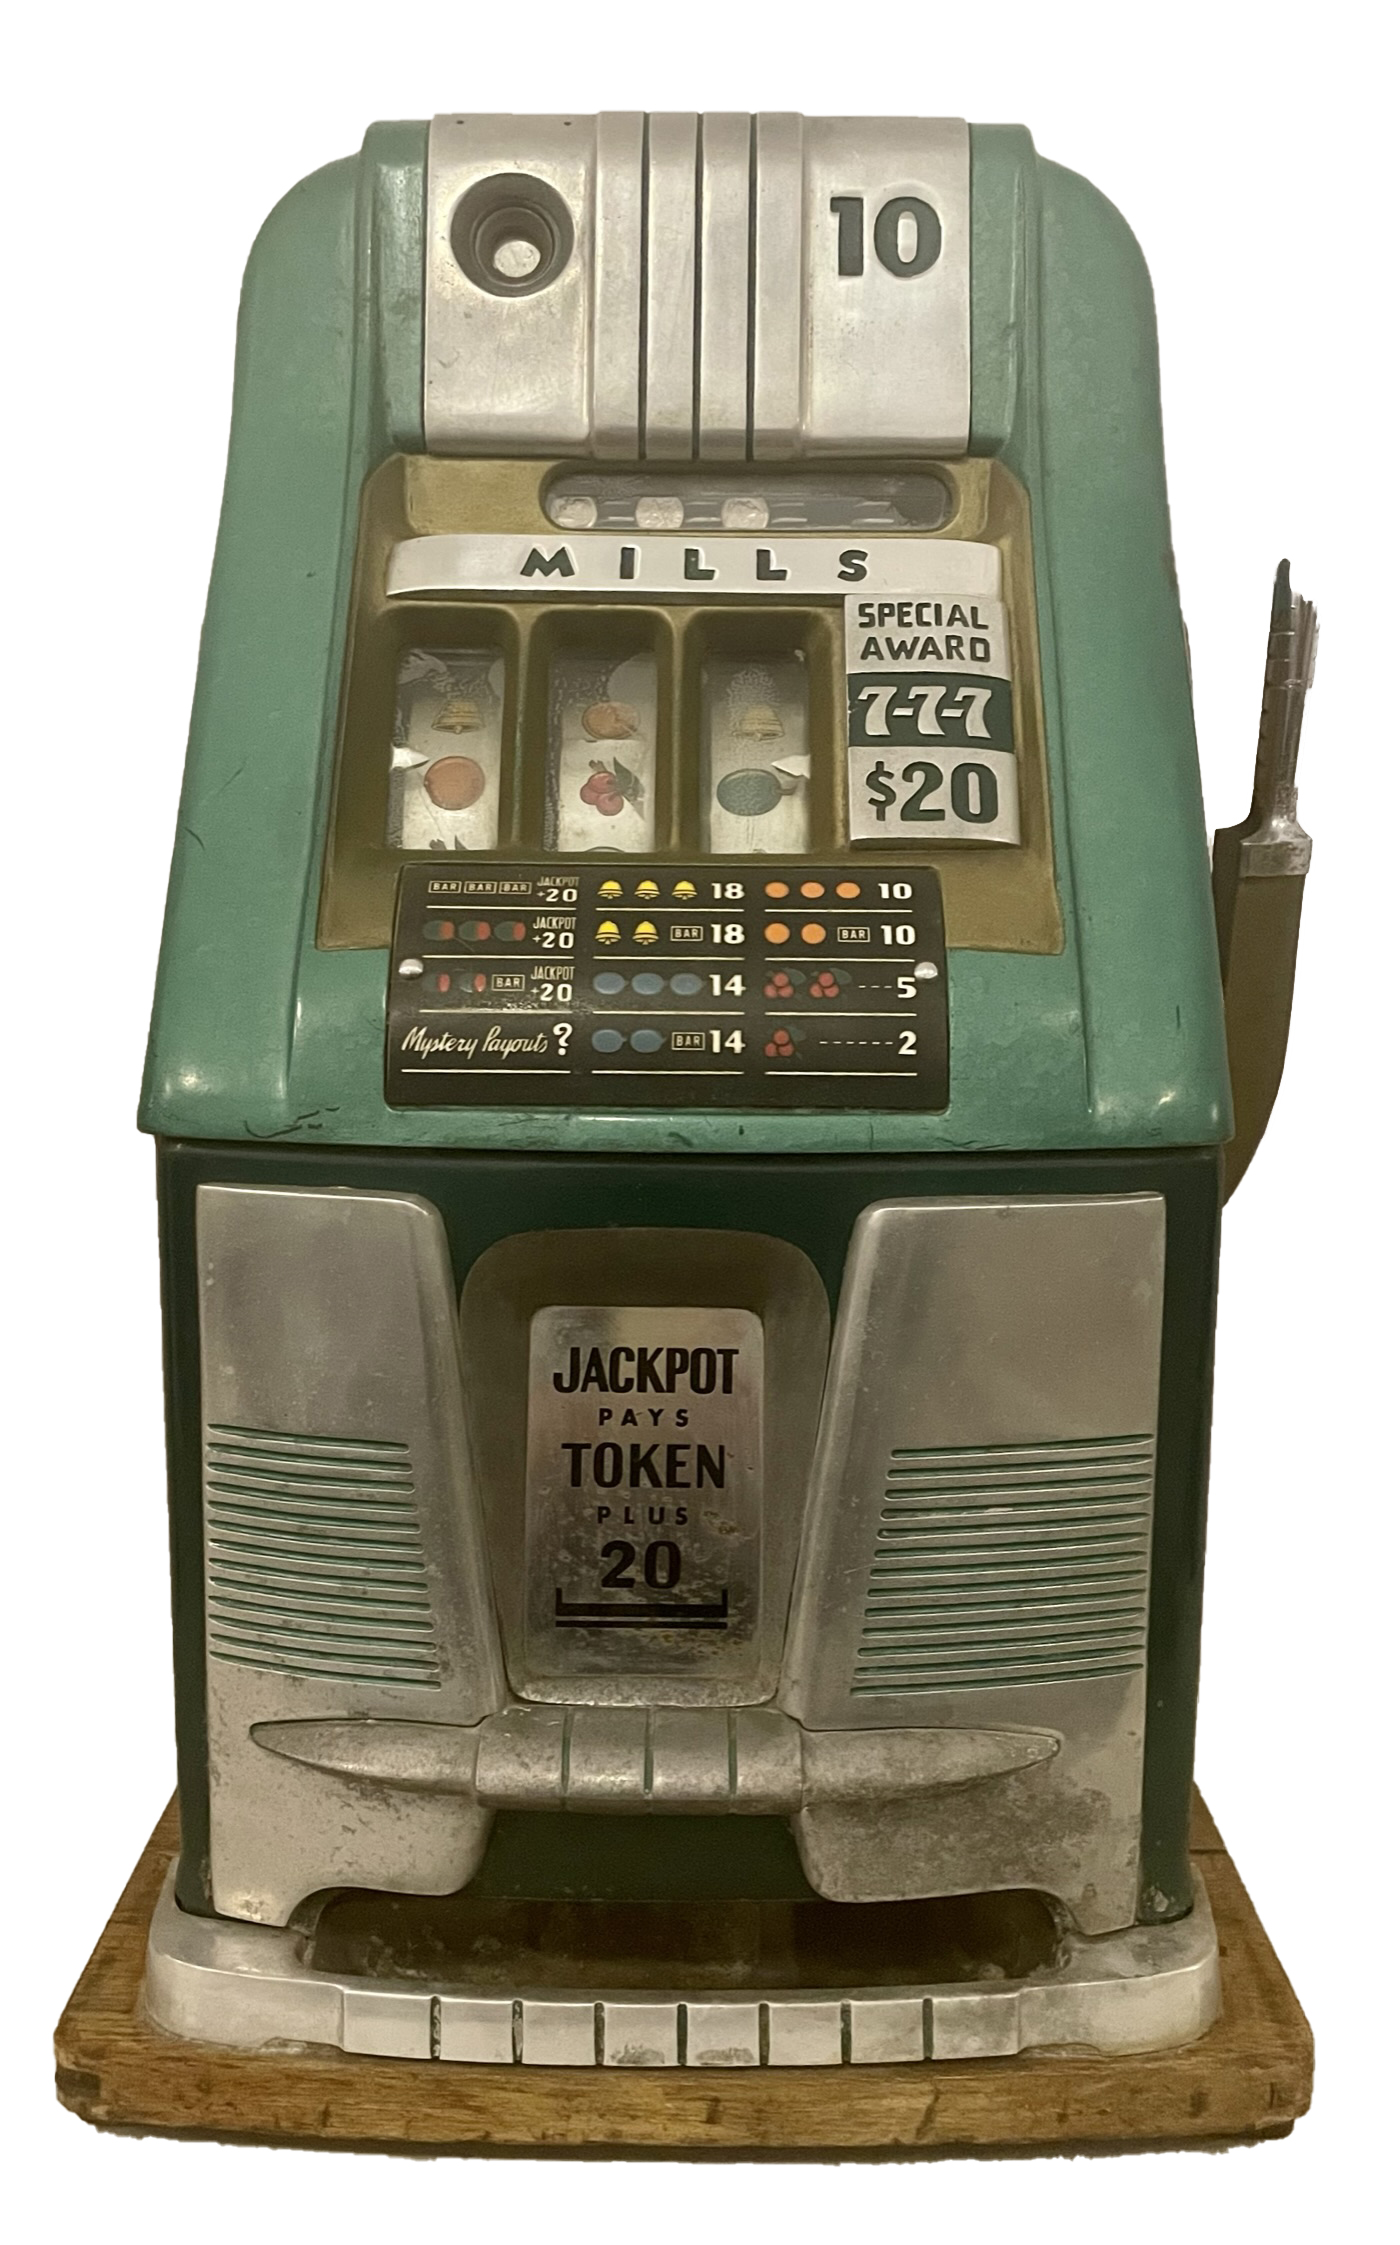 https://0201.nccdn.net/1_2/000/000/0f5/8ee/mills-slot-machine.jpg